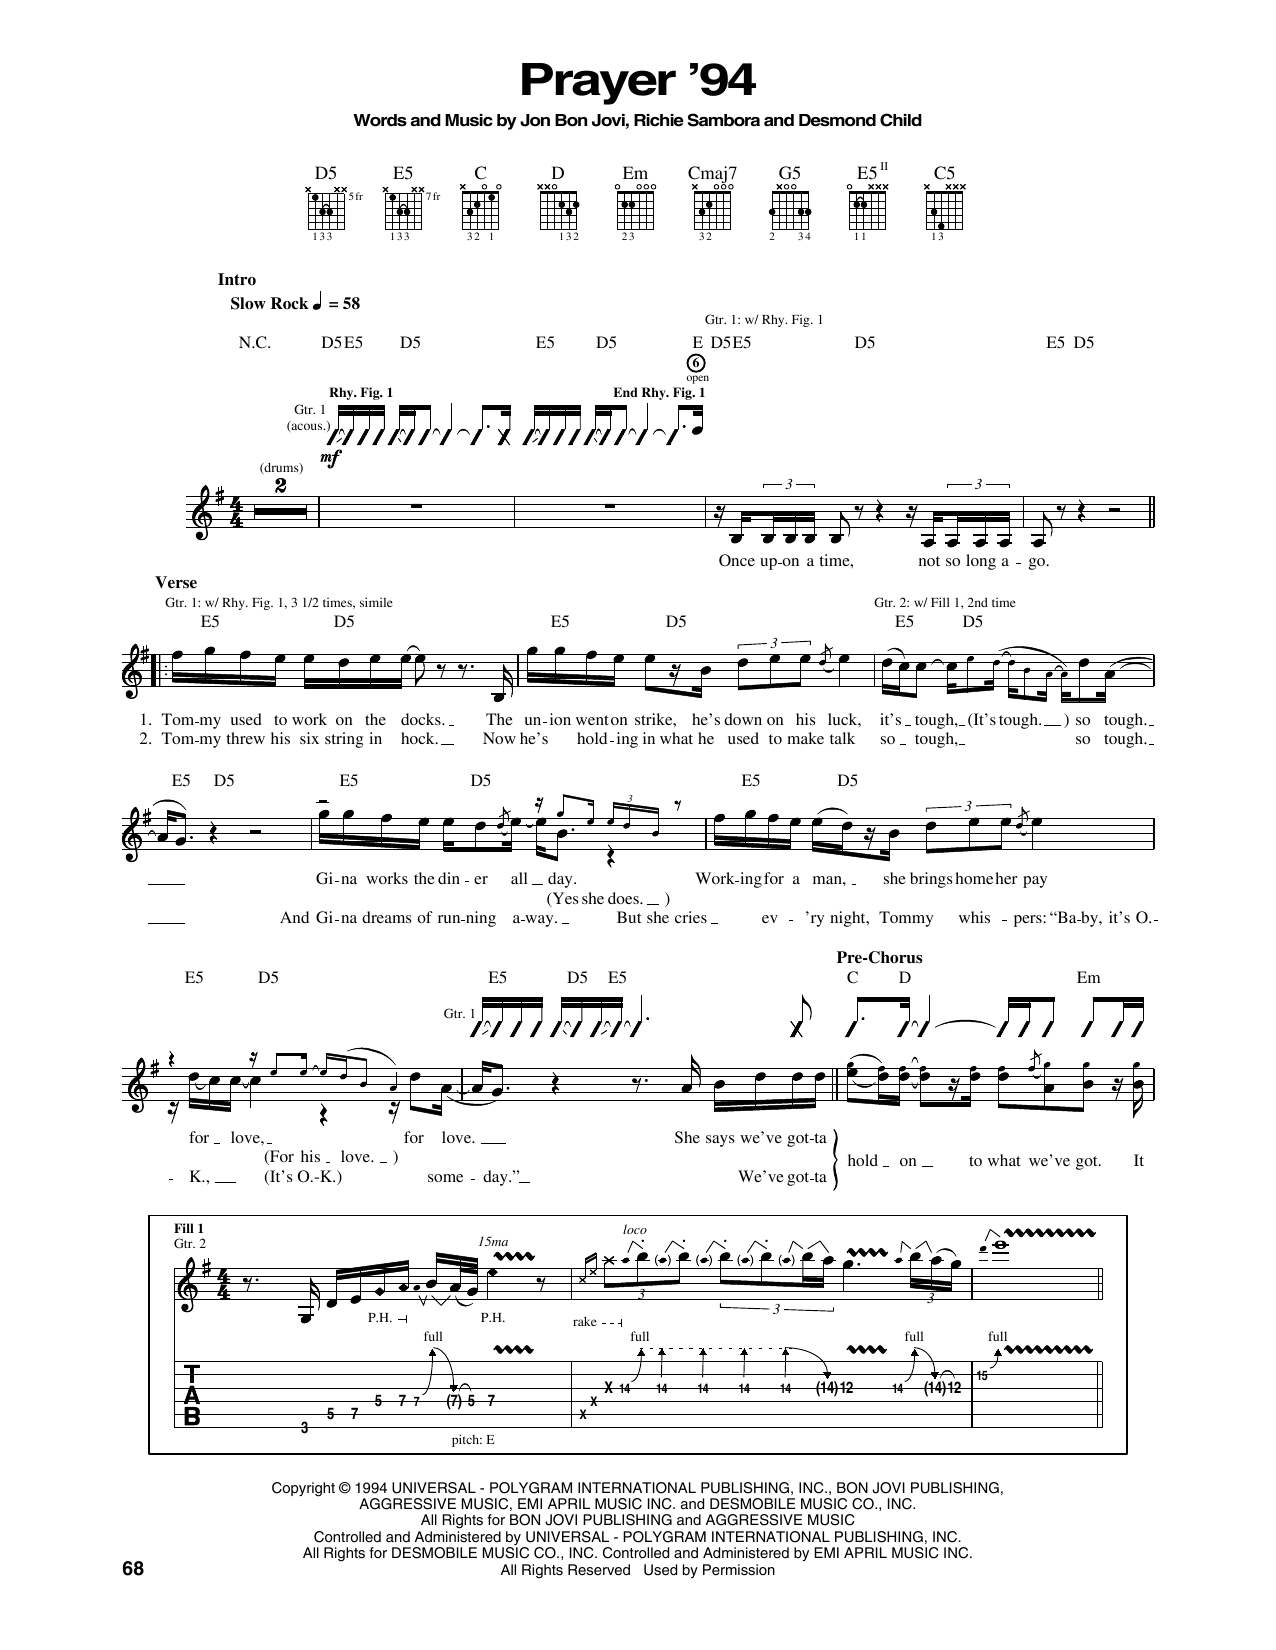 Bon Jovi Prayer '94 Sheet Music Notes & Chords for Guitar Tab - Download or Print PDF